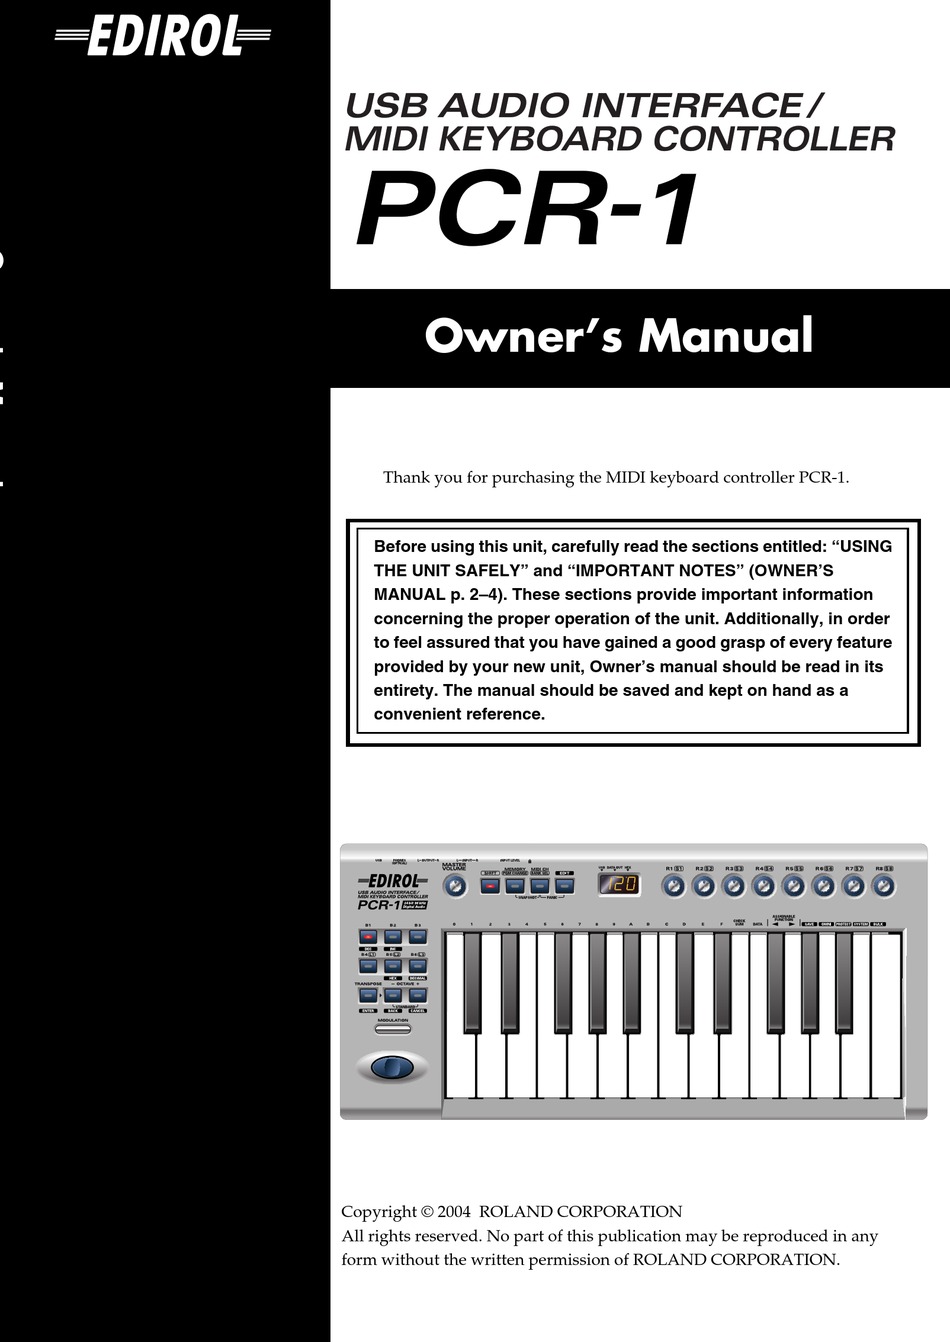 driver for midi keyboard pcr 800 windows 7